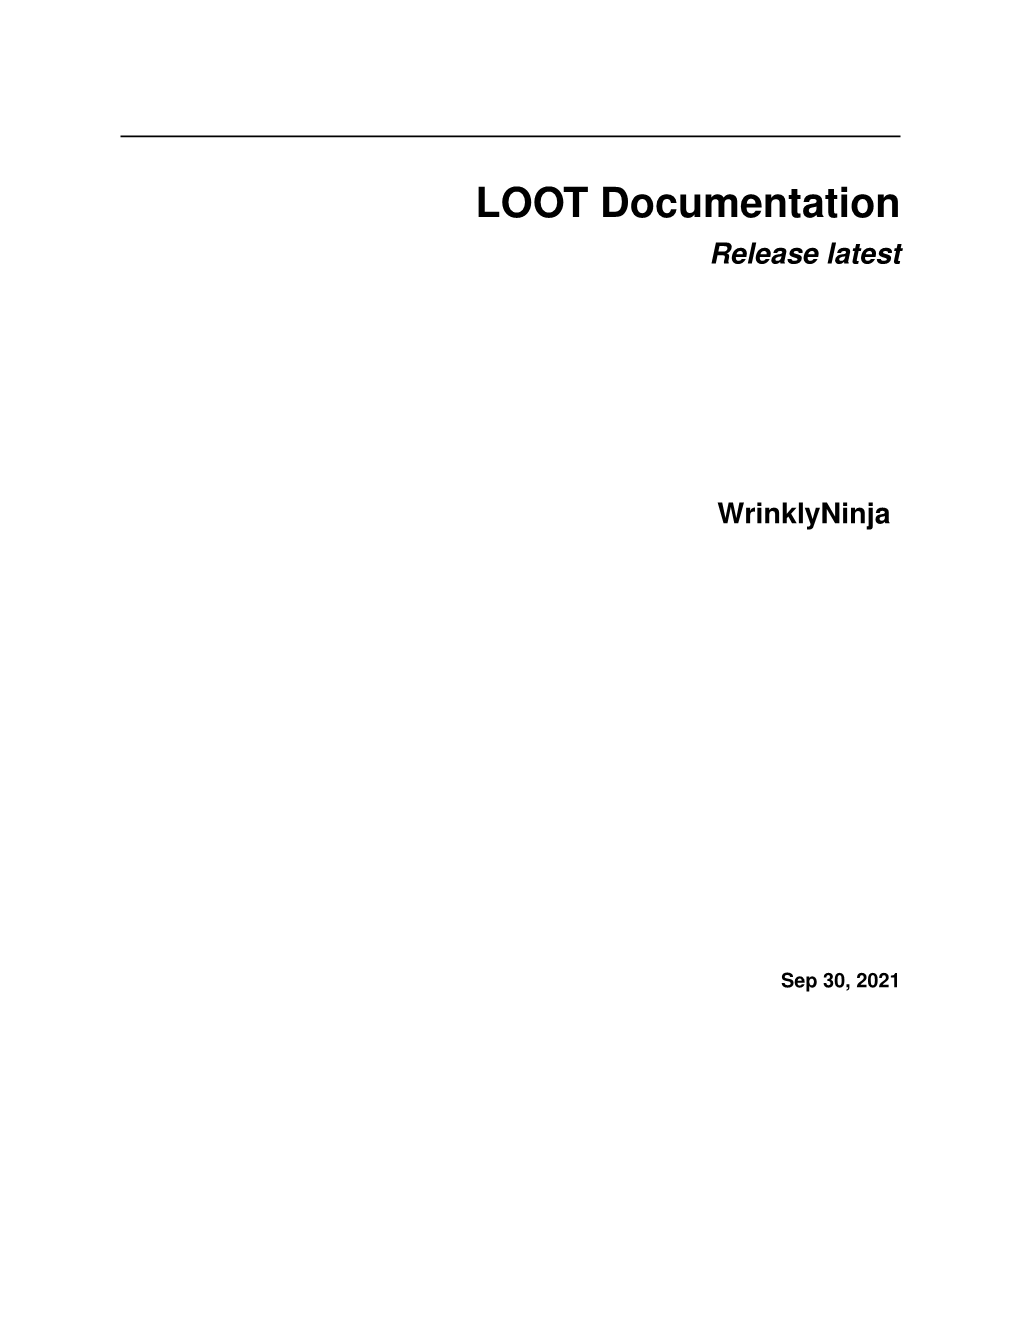 LOOT Documentation Release Latest